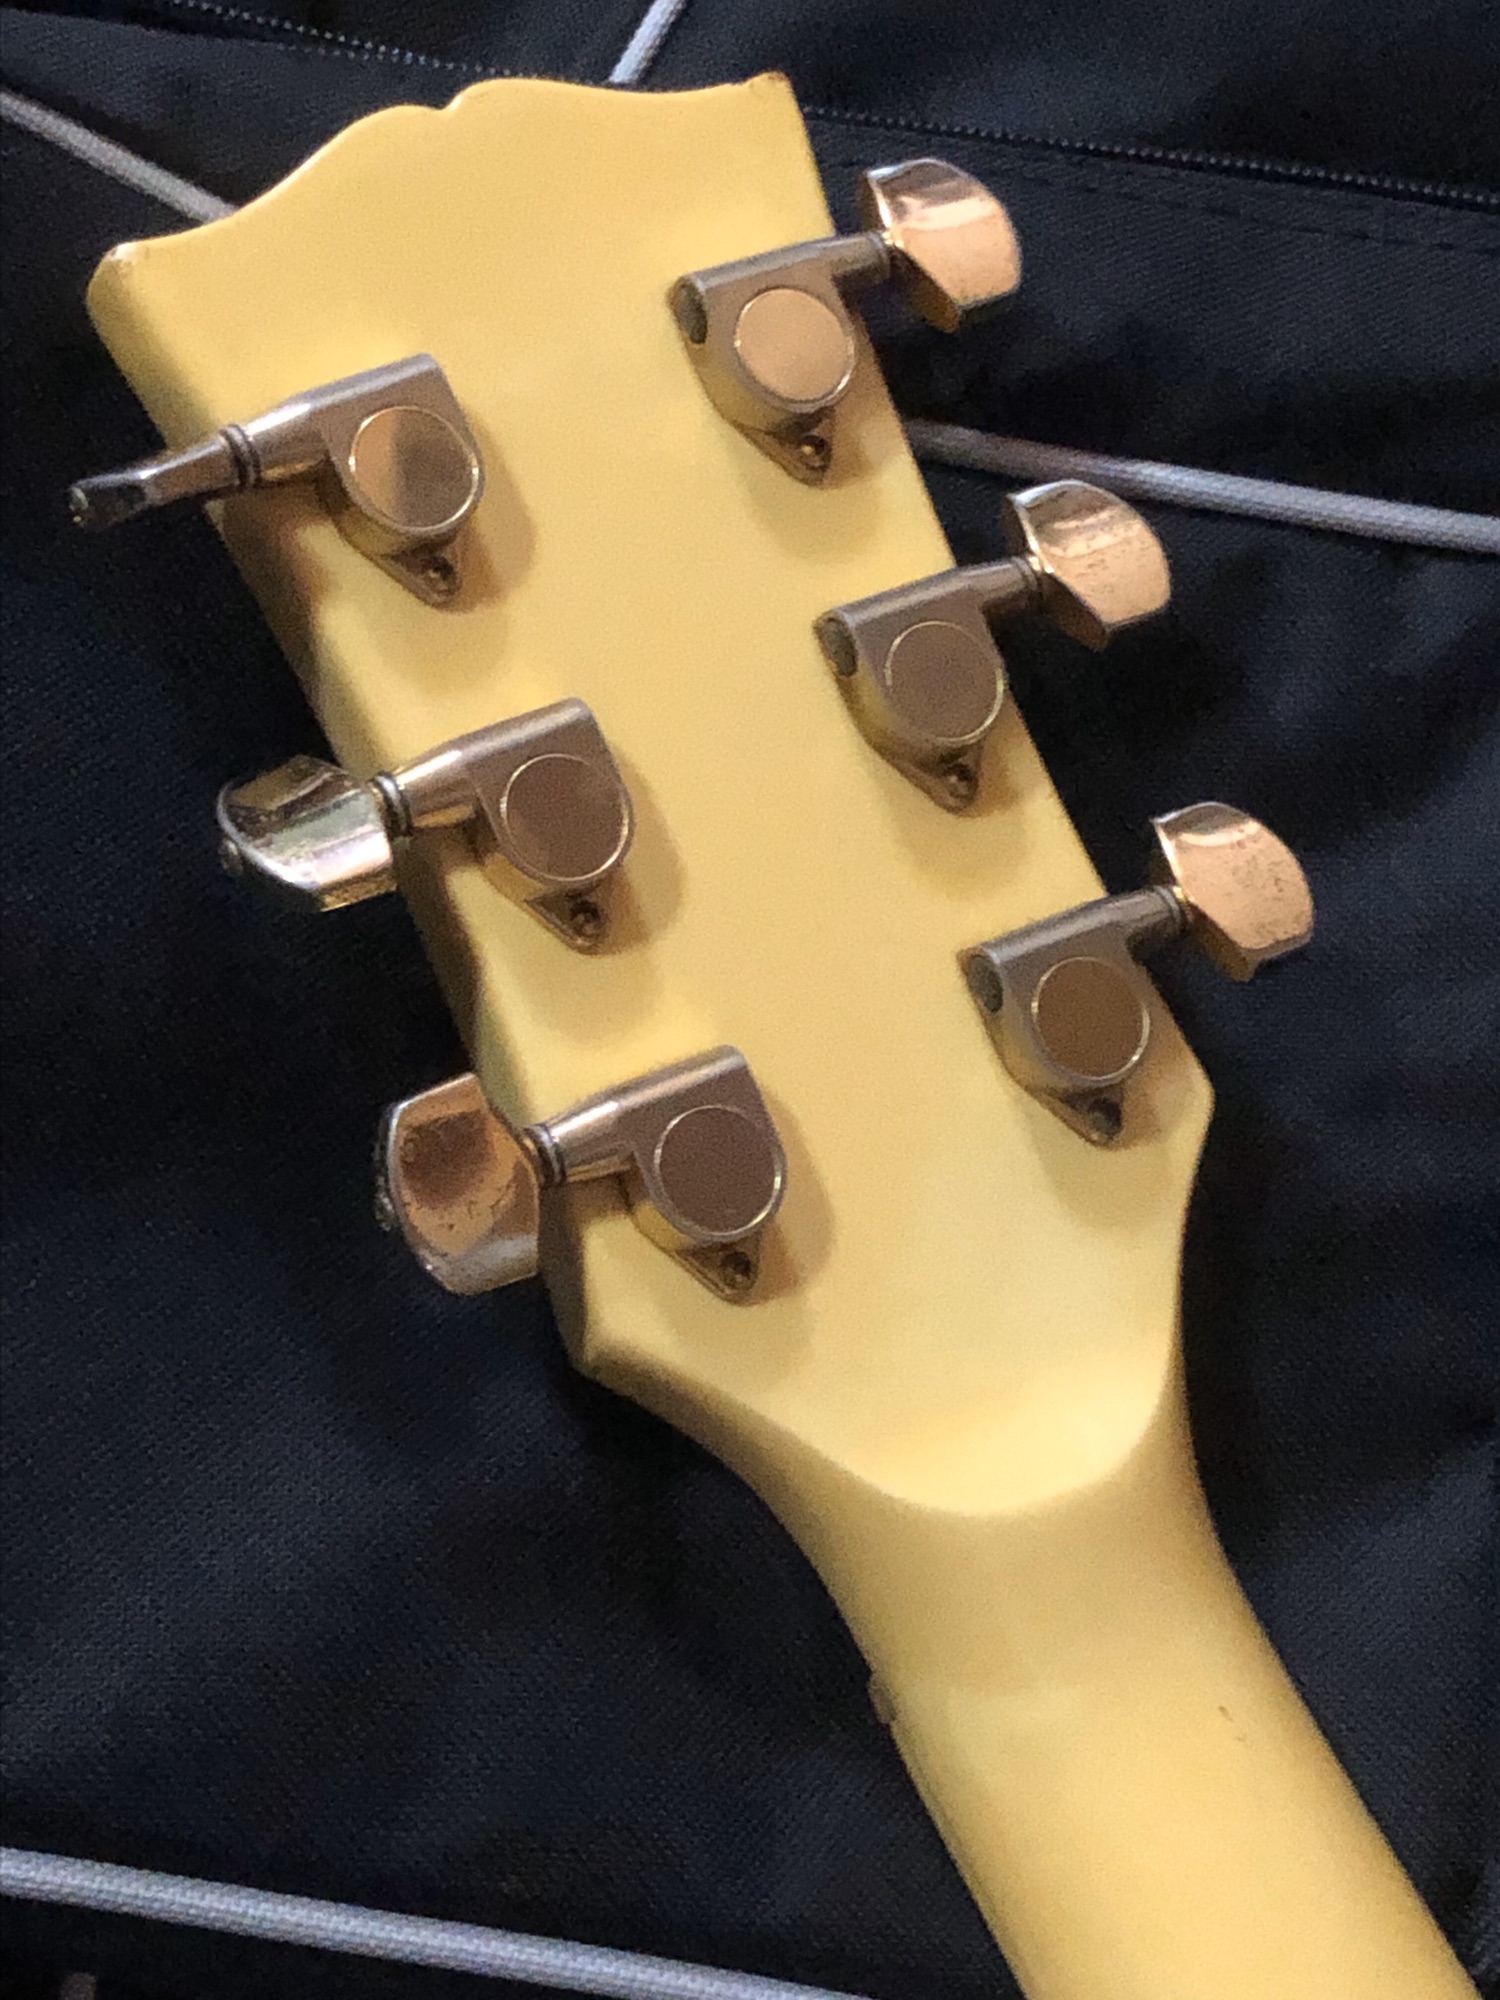 1983 Burny Randy Rhoads Model with Gibson Pickups Mod 〜 SOLD